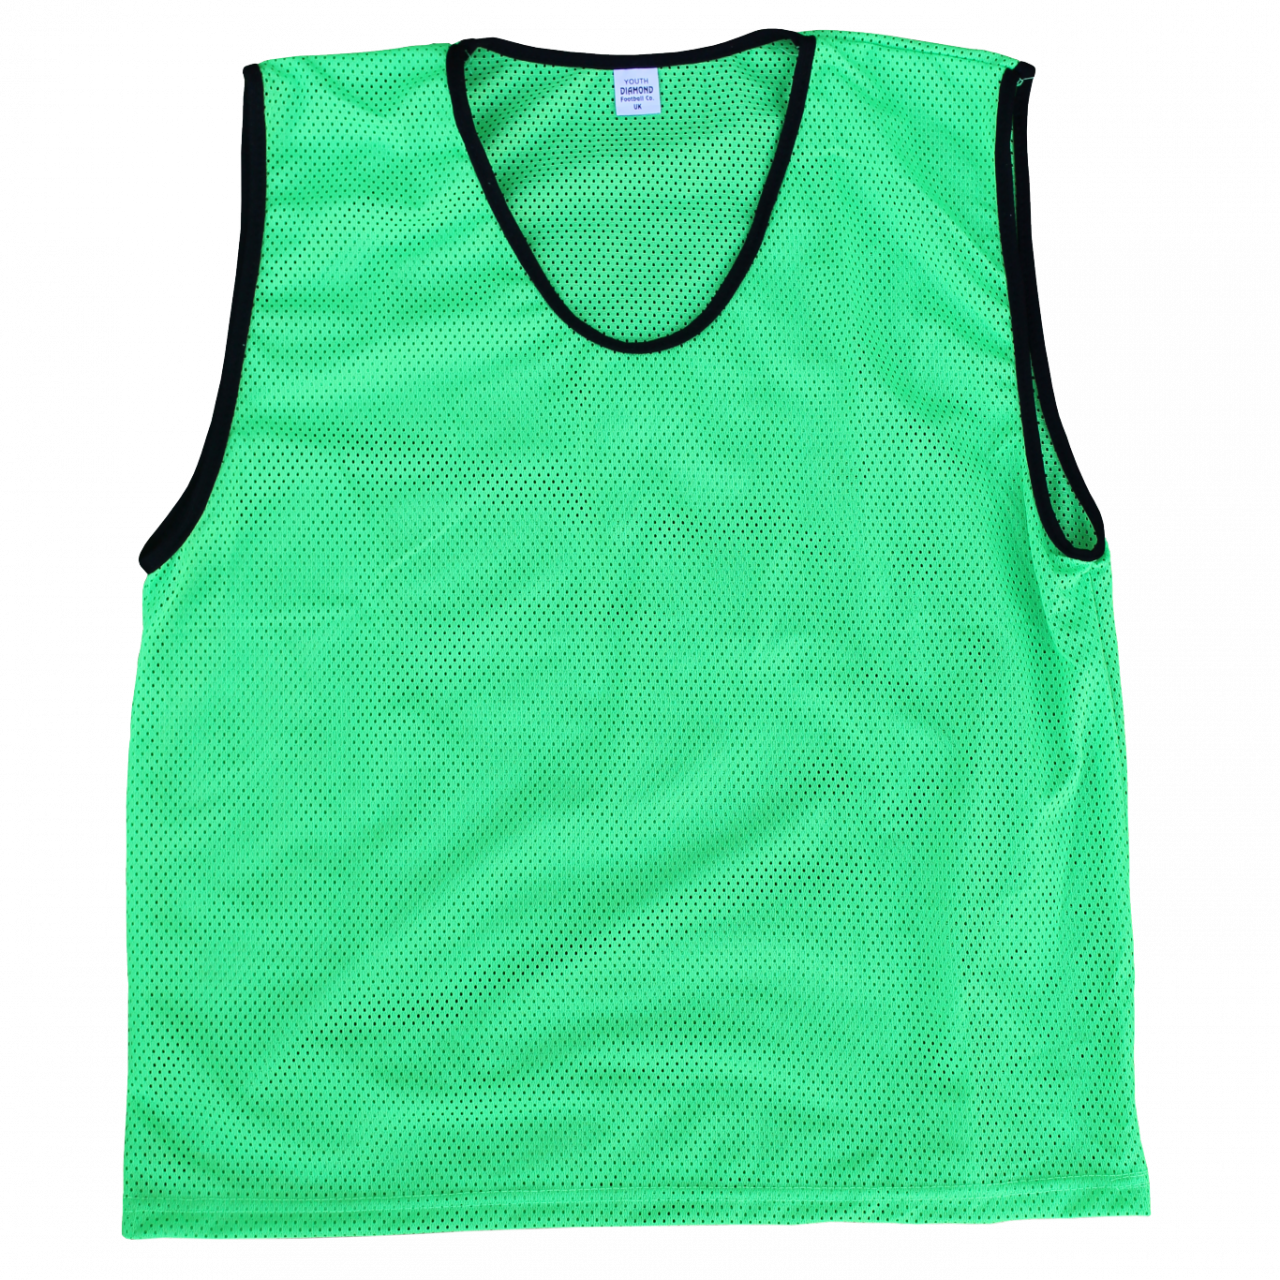 4pcs Football Training Vest Fluorescent Green Mercerized Cloth